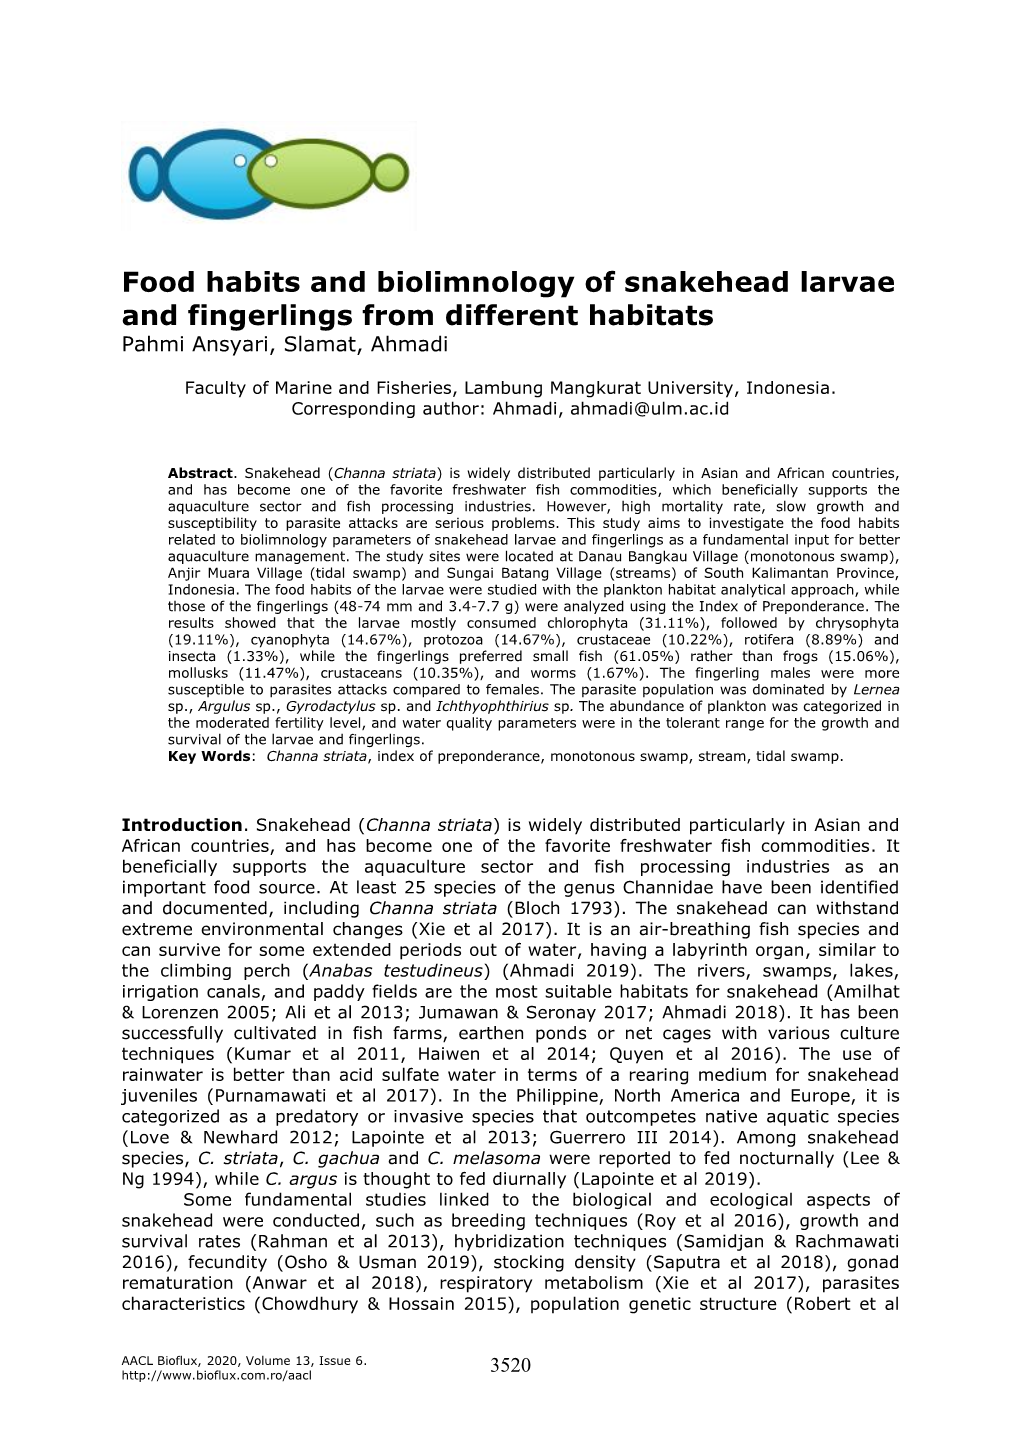 Food Habits and Biolimnology of Snakehead Larvae and Fingerlings from Different Habitats Pahmi Ansyari, Slamat, Ahmadi